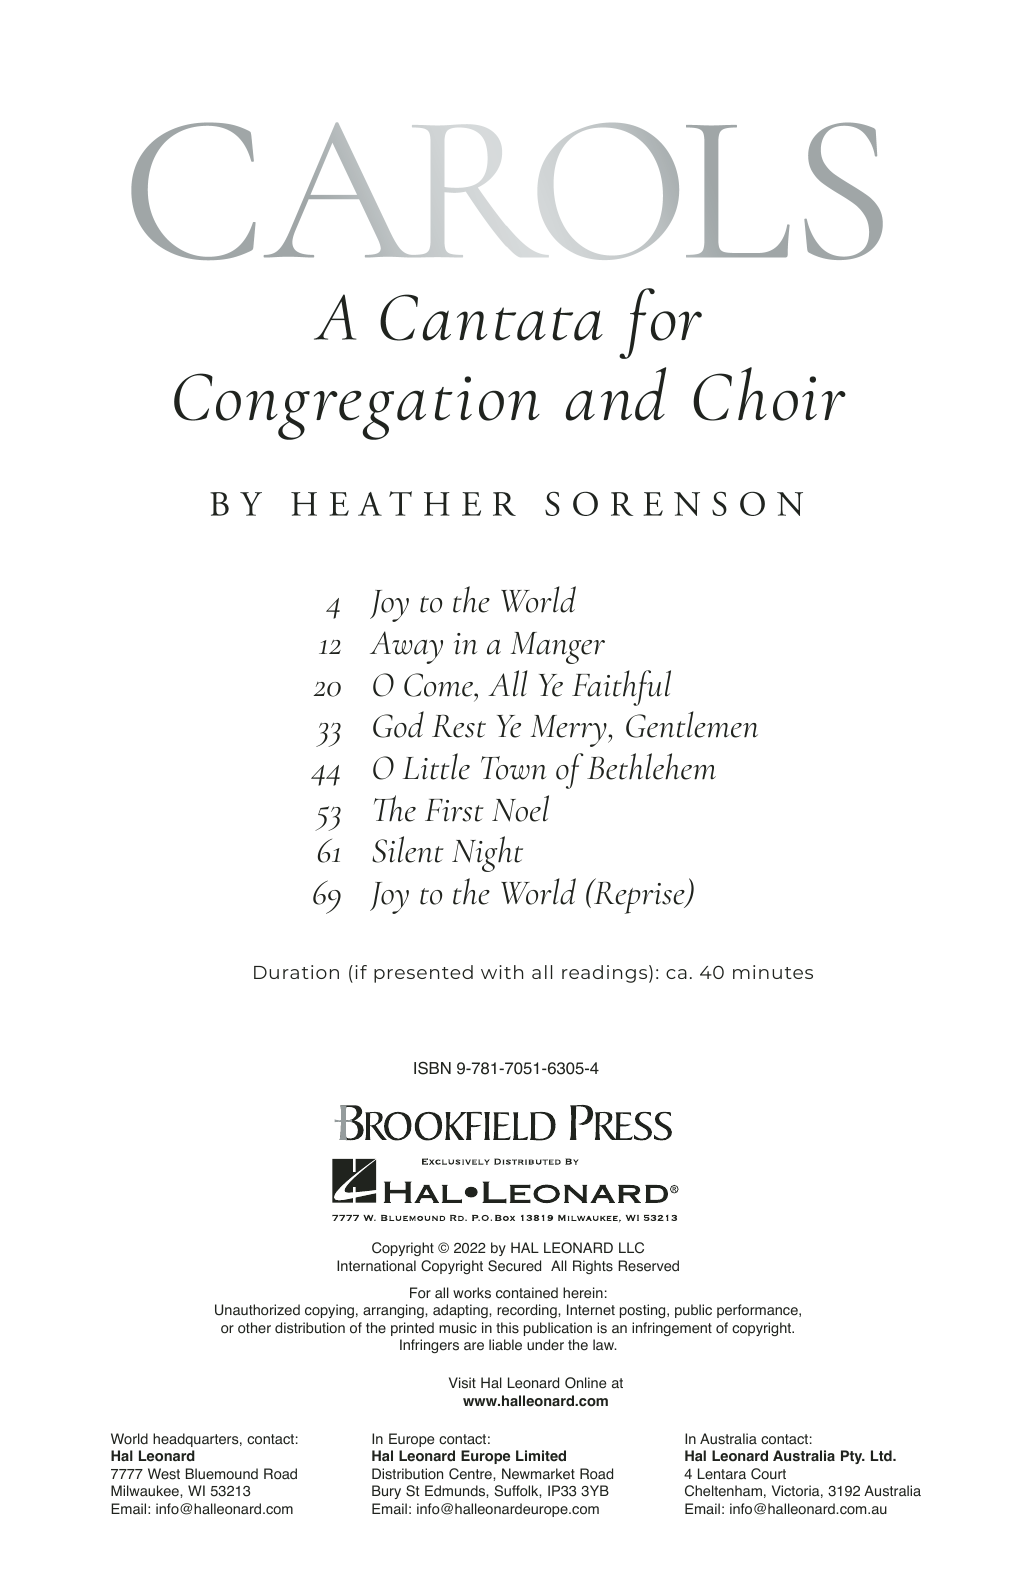 Heather Sorenson Carols (A Cantata for Congregation and Choir) sheet music notes and chords arranged for SATB Choir